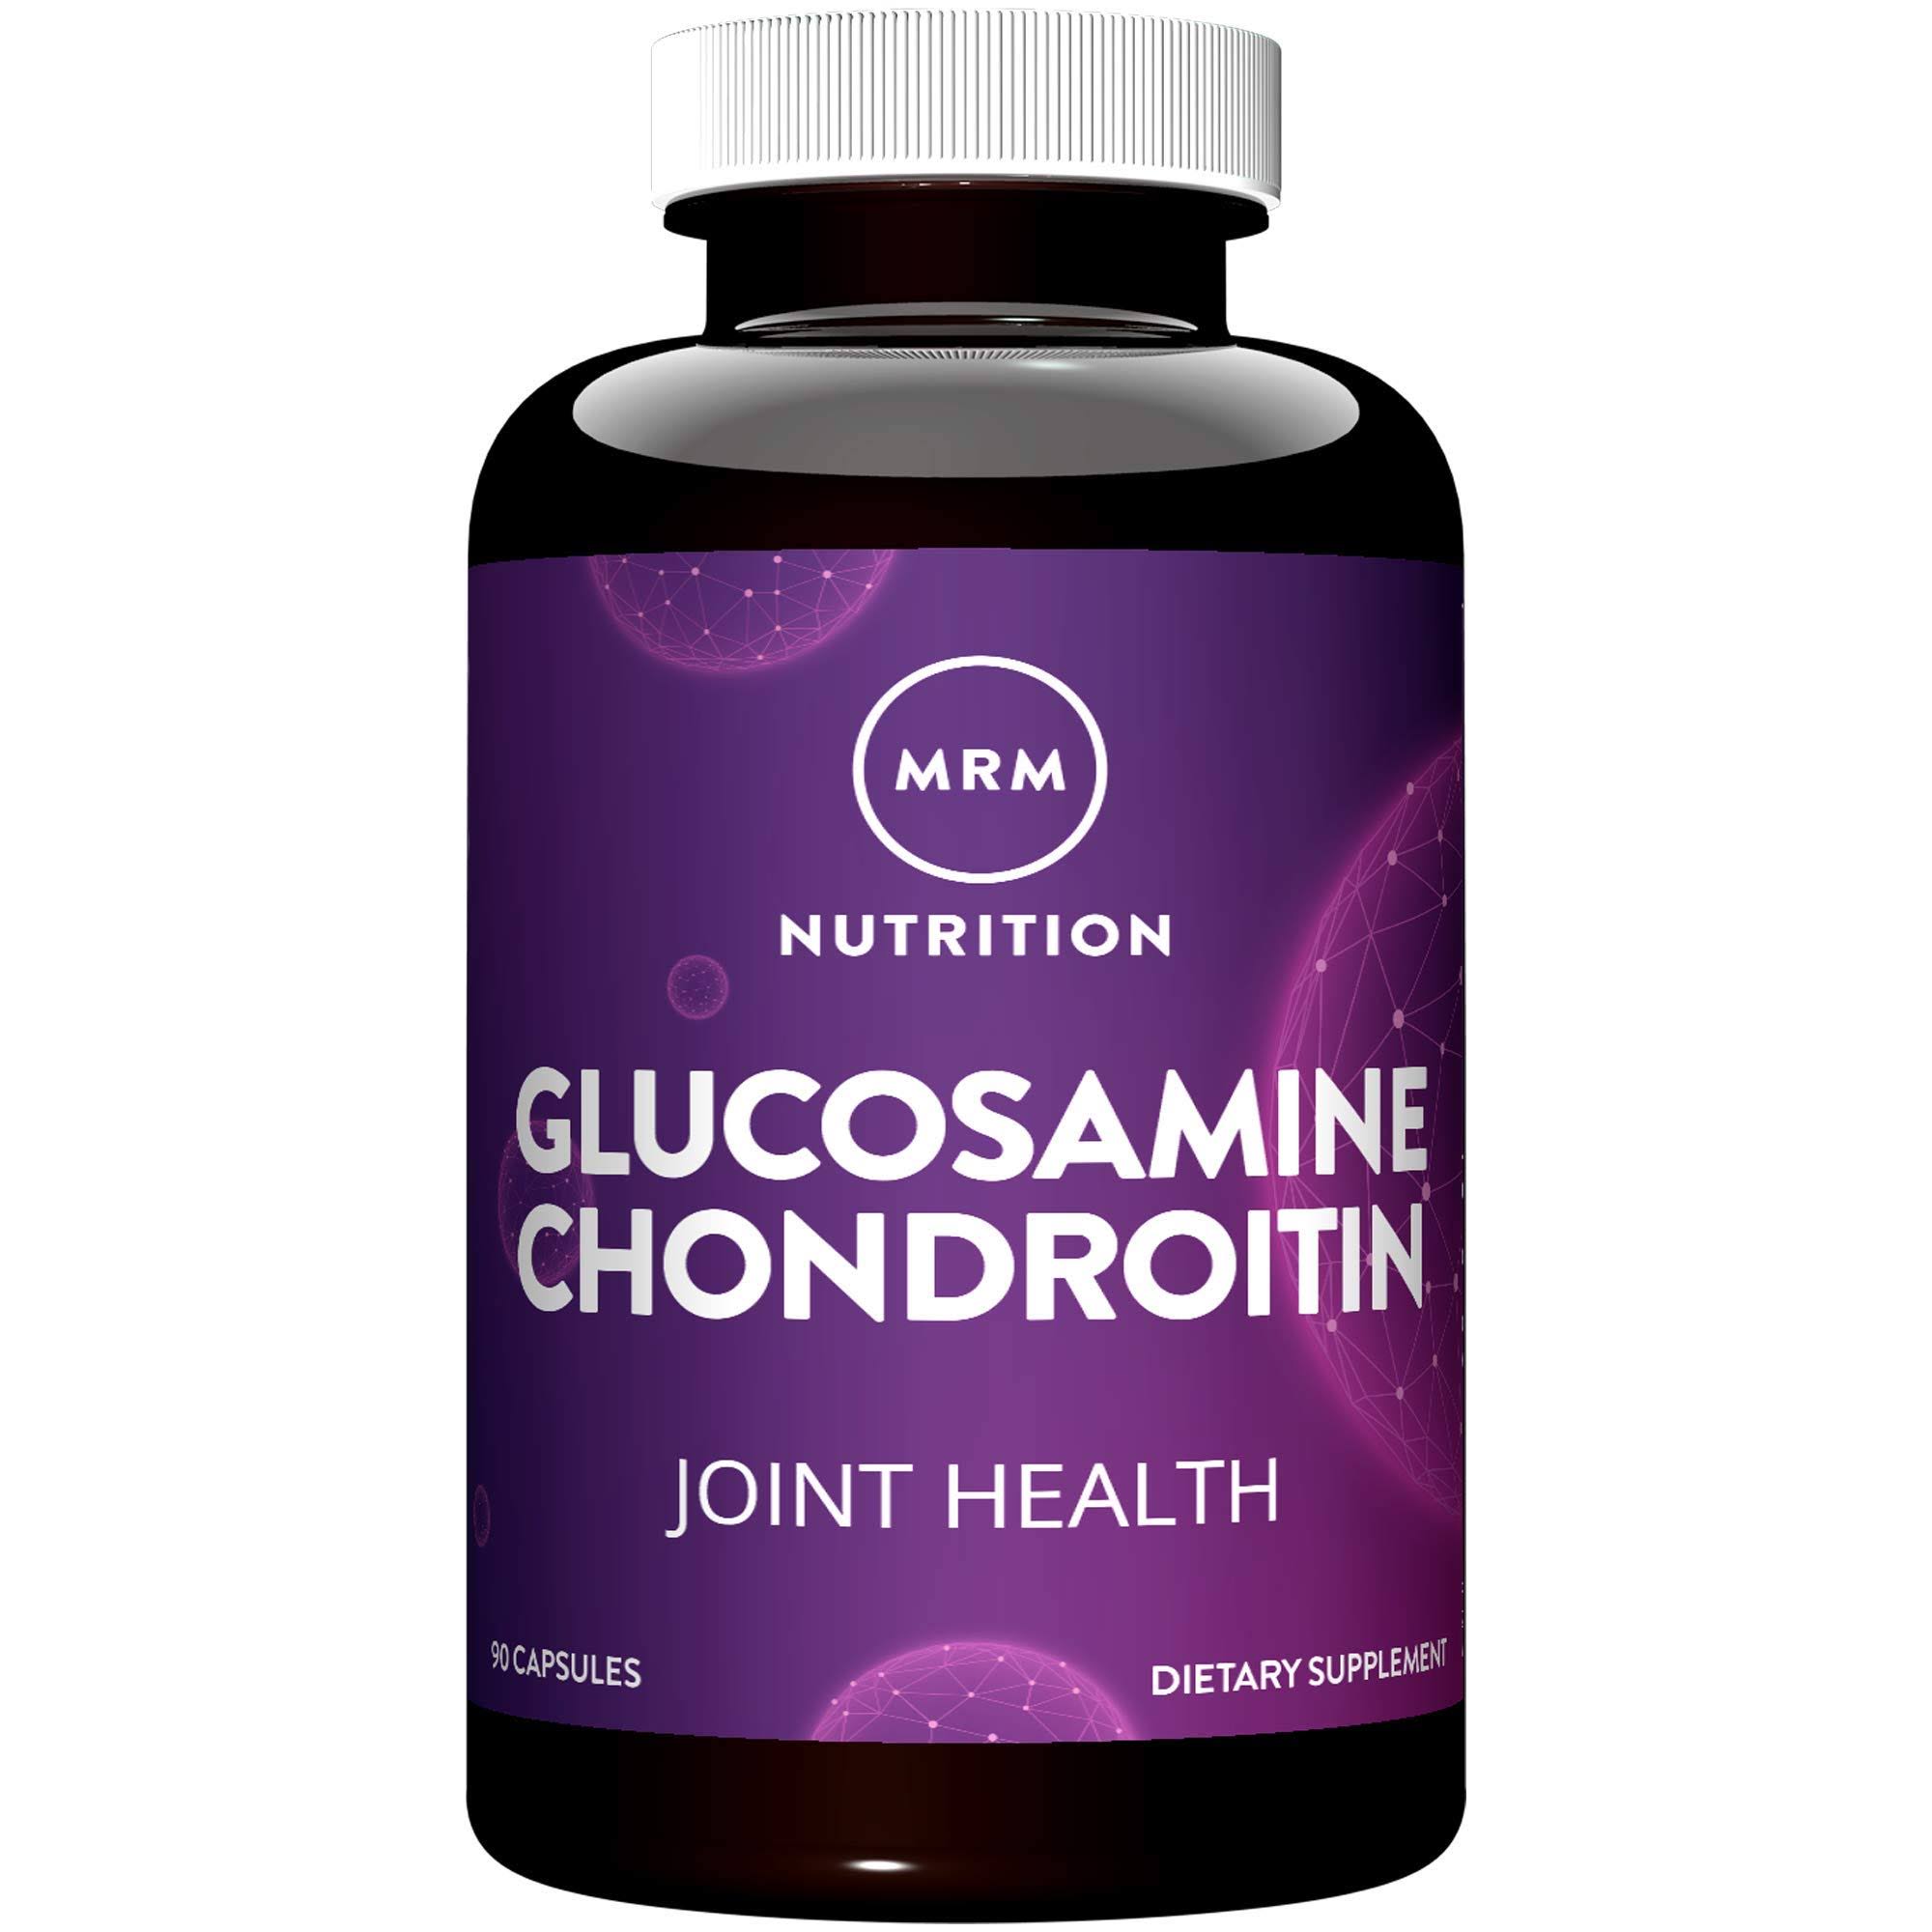 MRM Glucosamine Chondroitin Dietary Supplement - 1500mg, 1200mg, 90ct